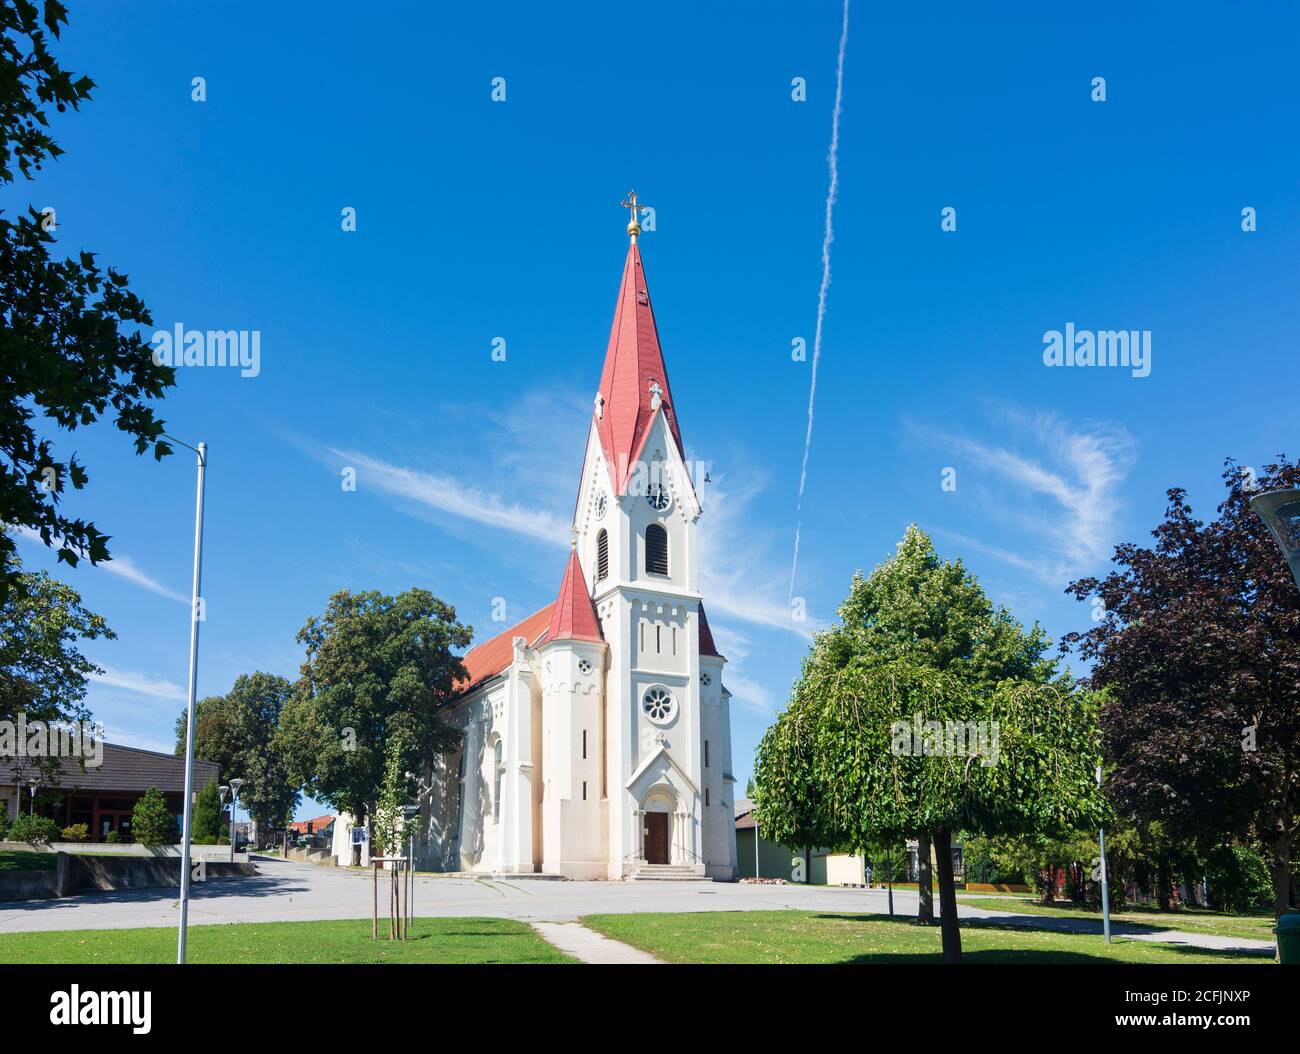 Nickelsdorf: Catholic parish church Nickelsdorf in Neusiedler See (Lake Neusiedl), Burgenland, Austria Stock Photo